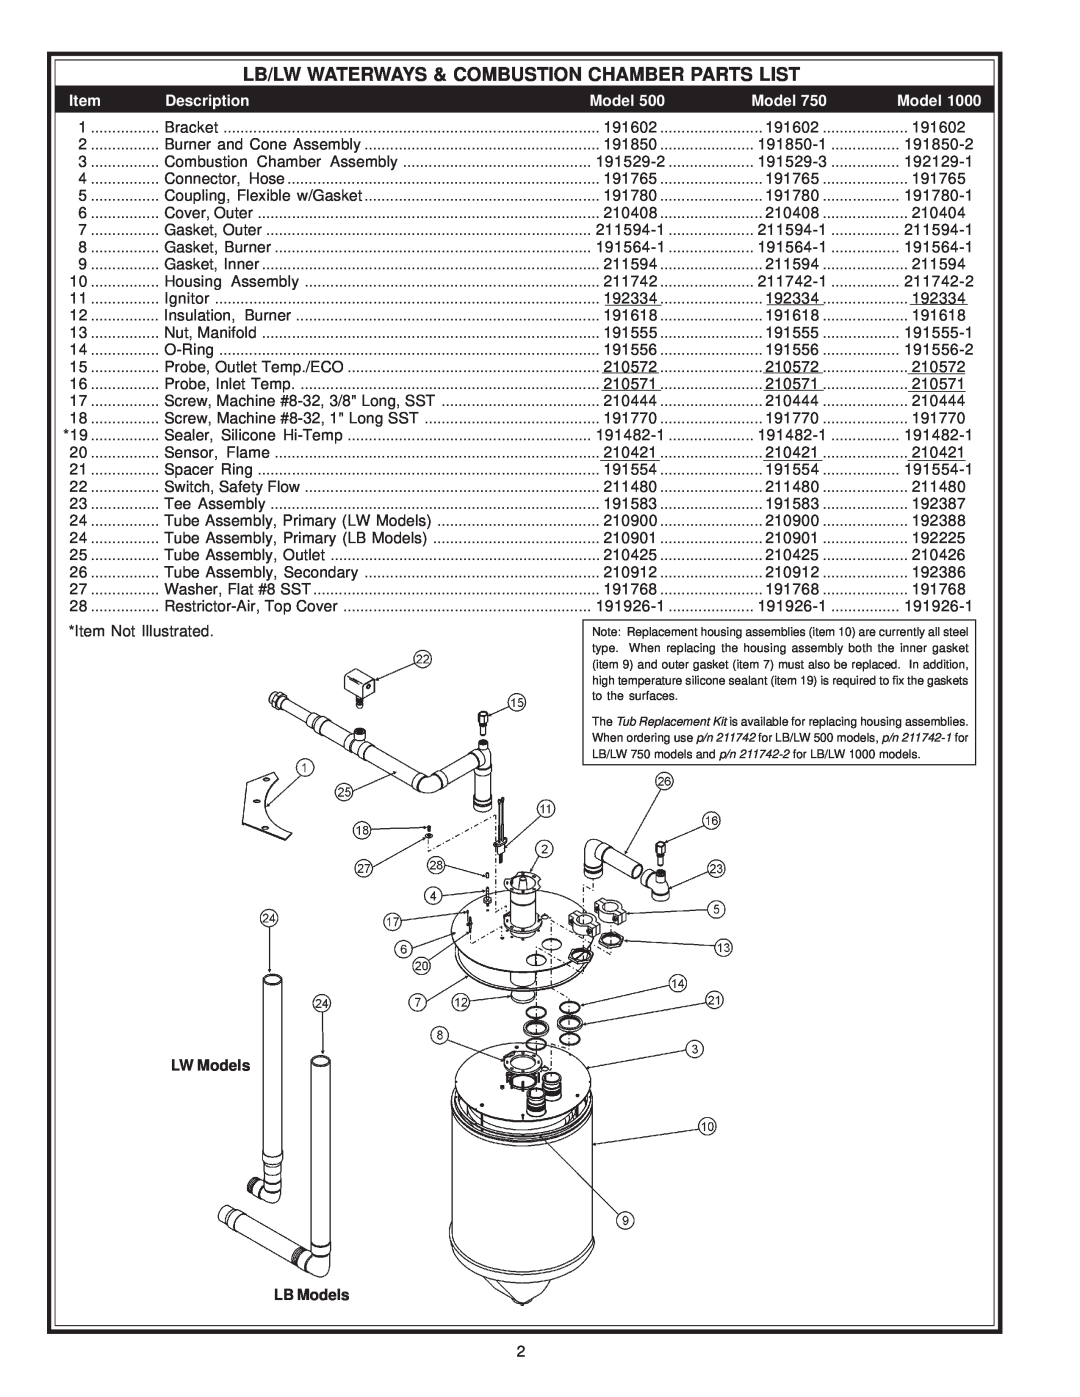 A.O. Smith LB/LW: 500, 750 & 1000 Lb/Lw Waterways & Combustion Chamber Parts List, Description, LW Models LB Models 